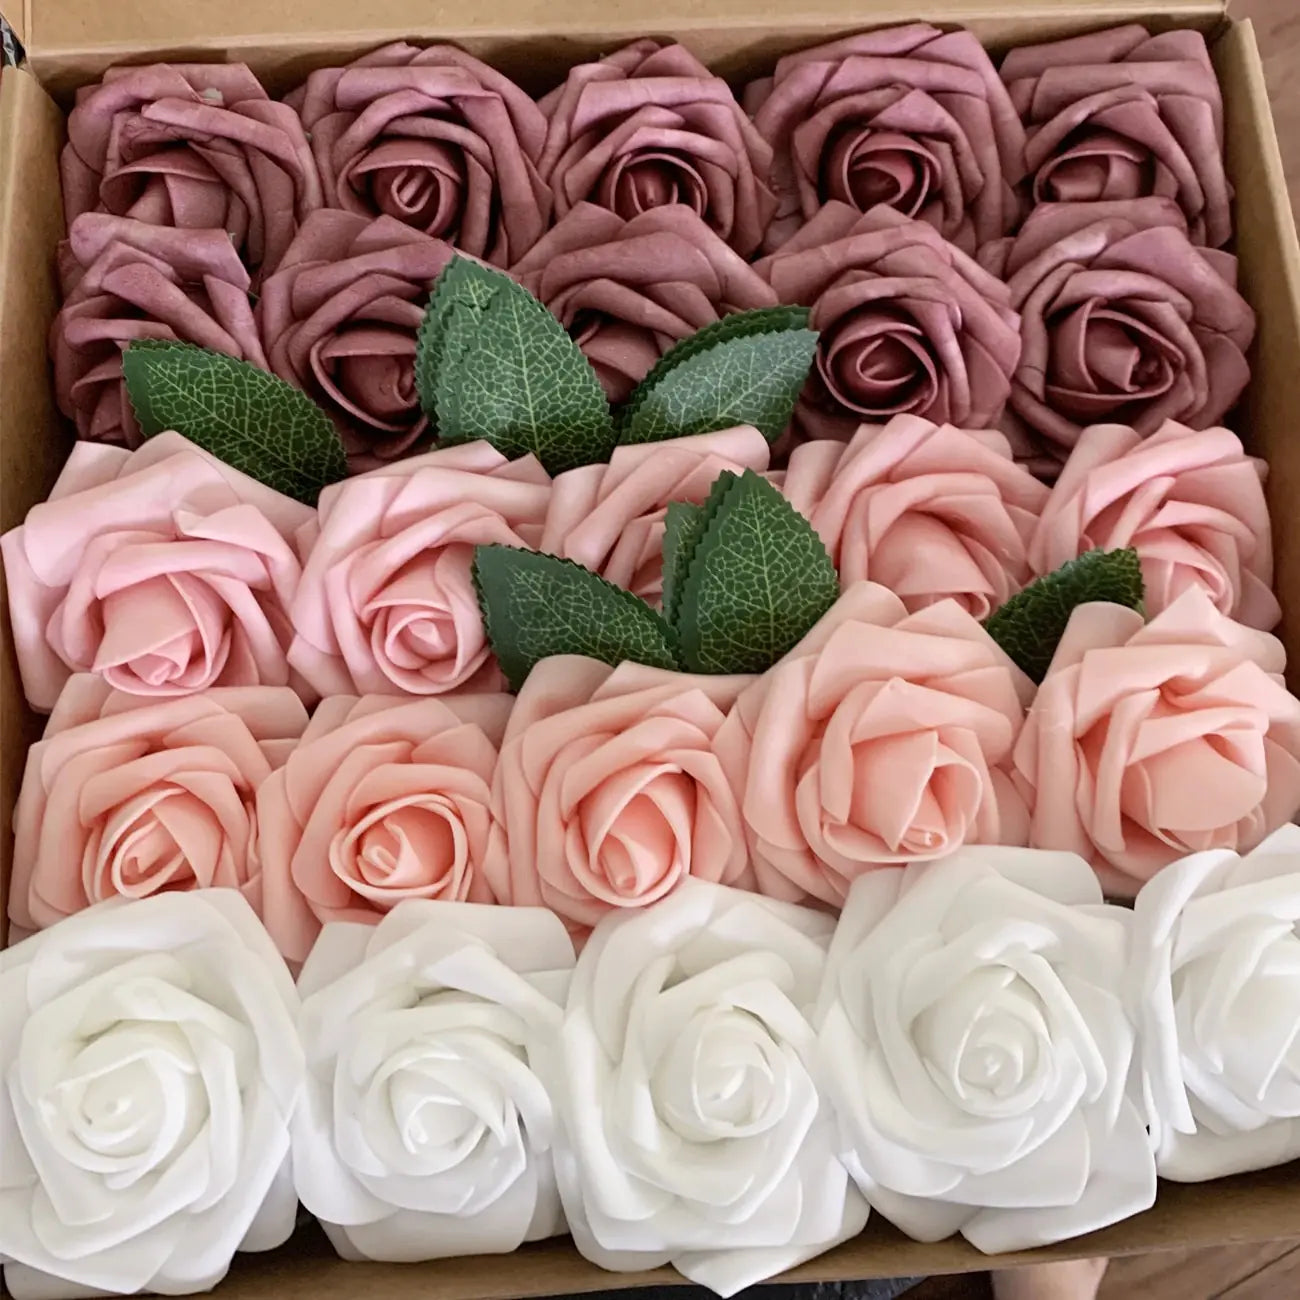 Box of scented rose petals 1 box